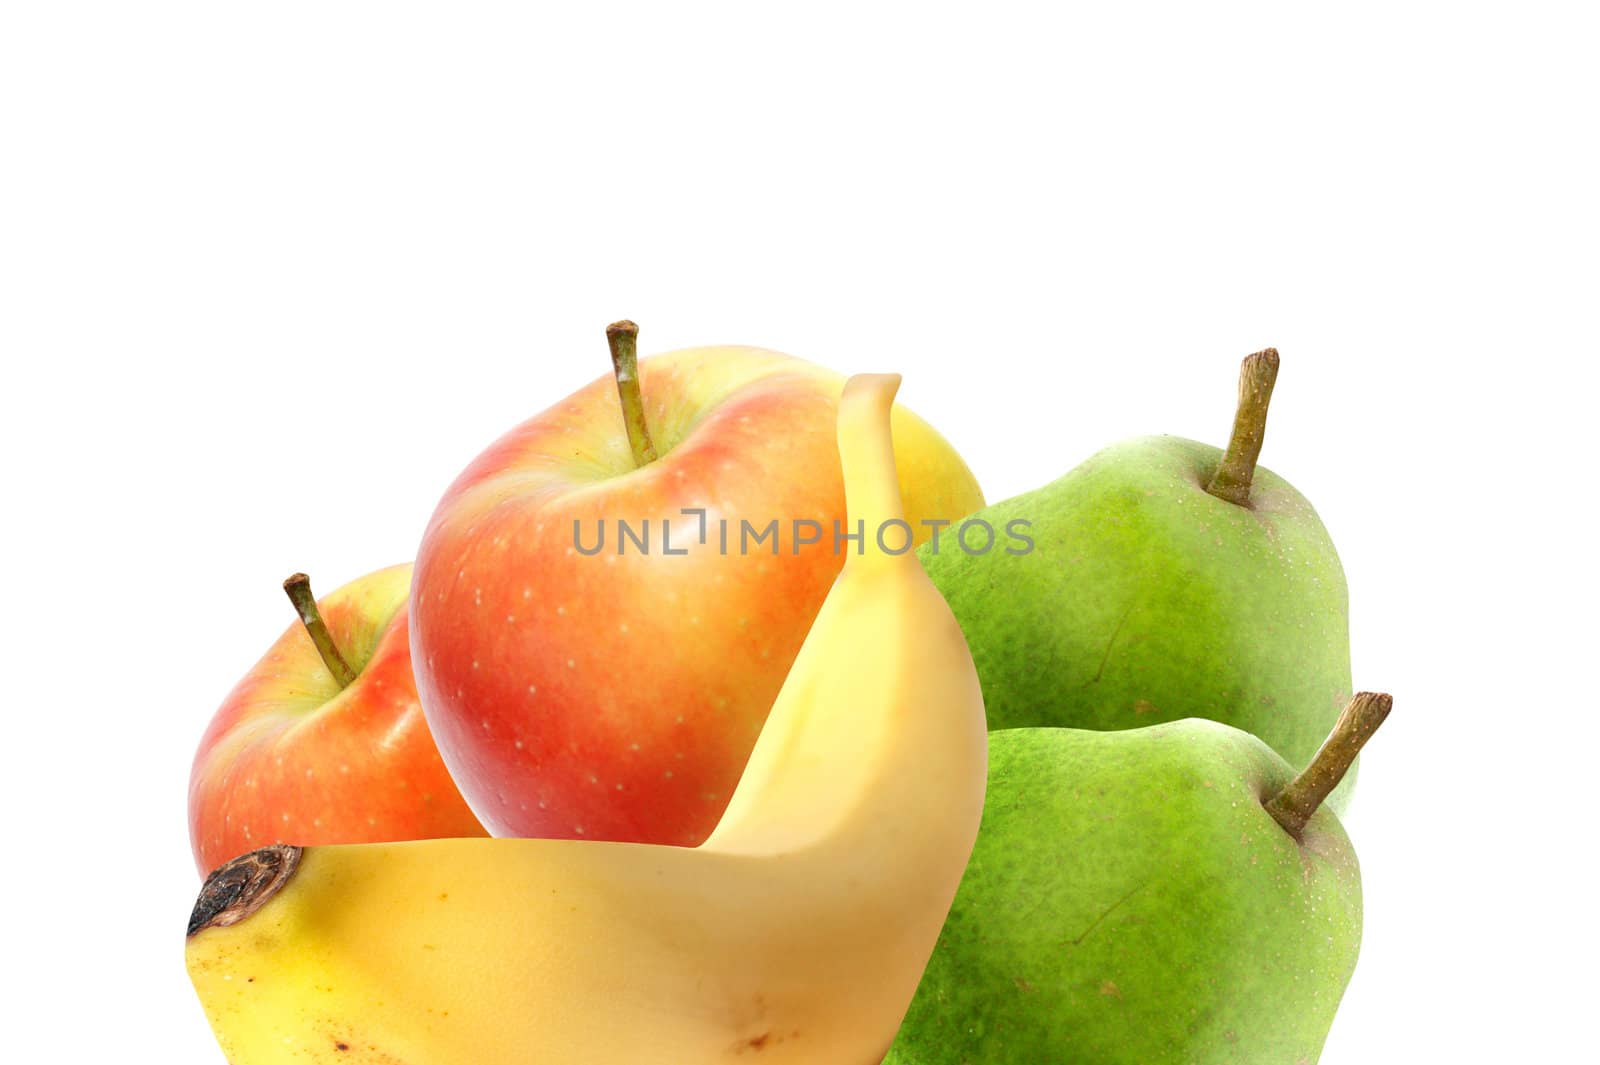 Apple, pear, banana